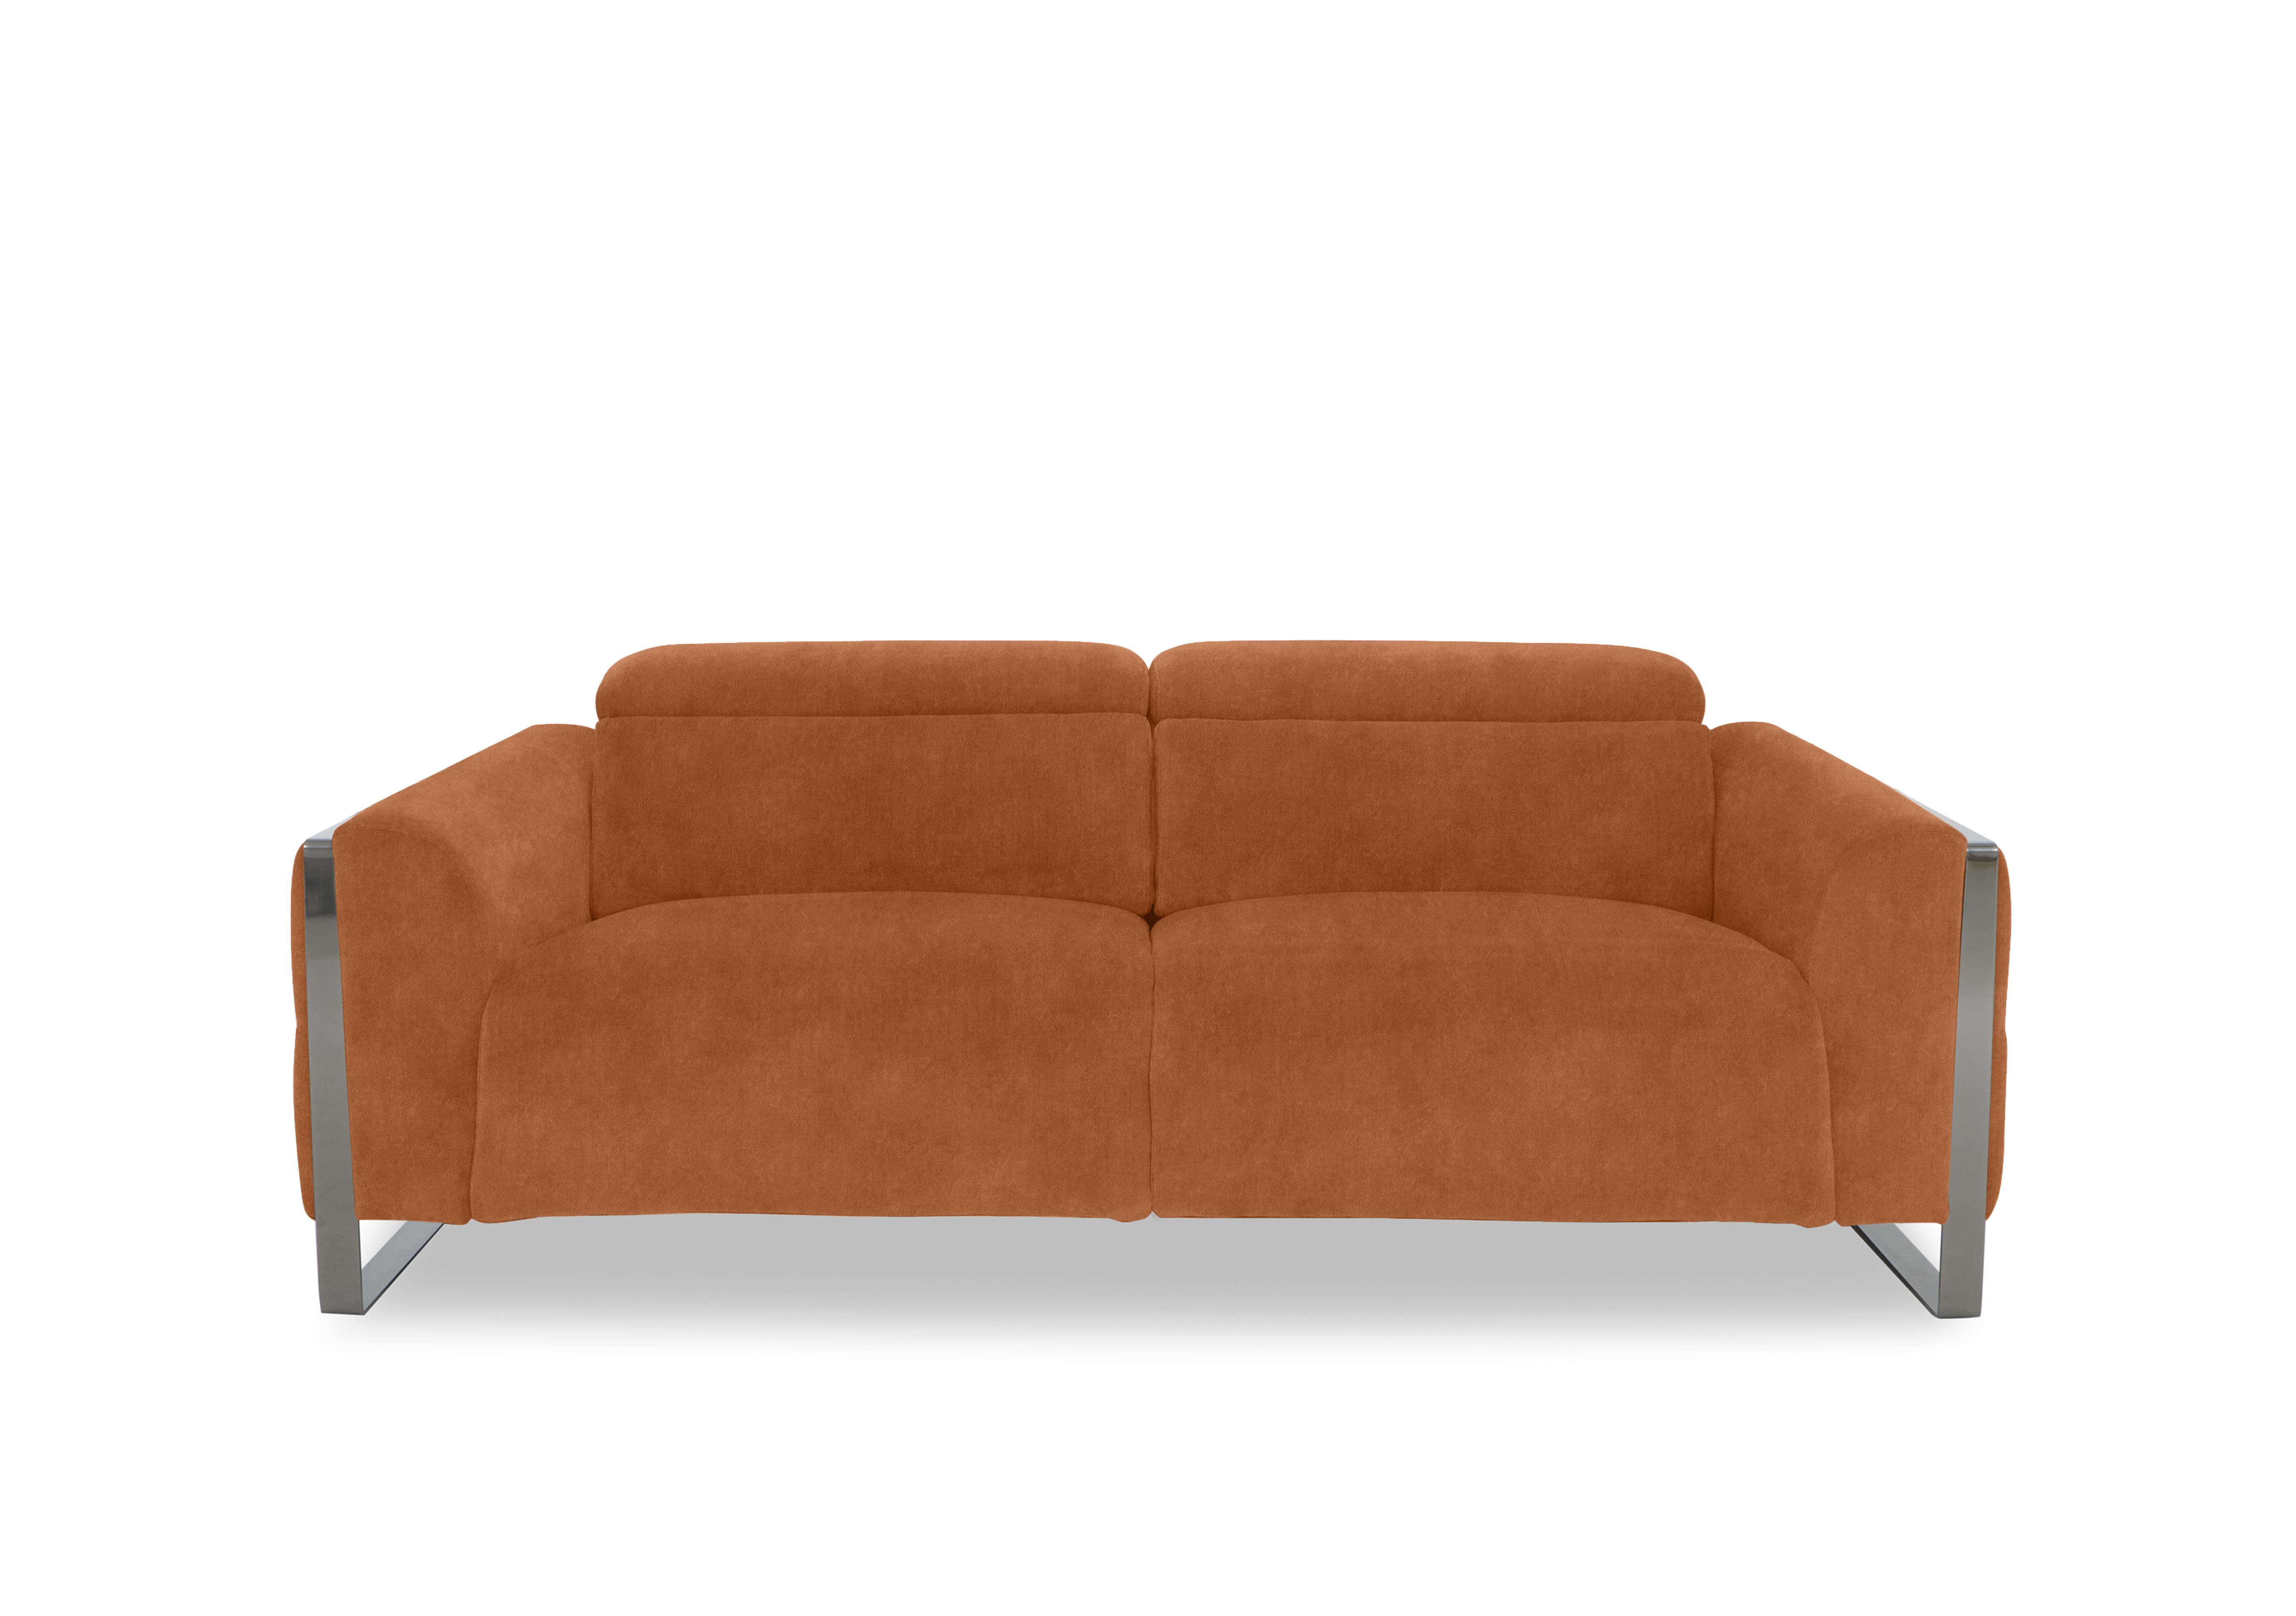 Gisella Fabric 3 Seater Sofa in Dexter Pumpkin 43509 on Furniture Village